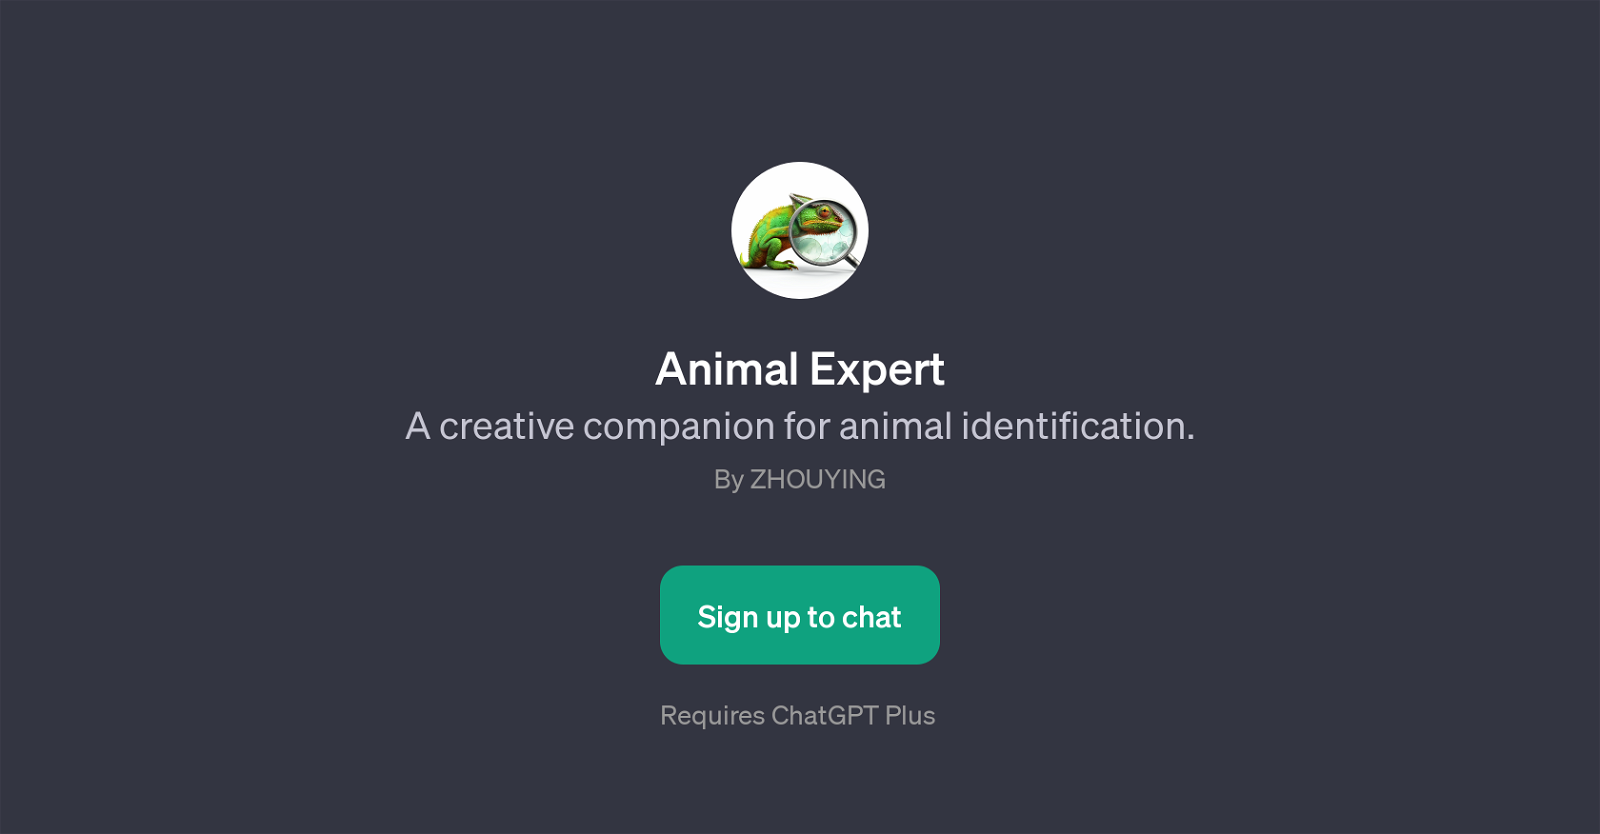 Animal Expert website